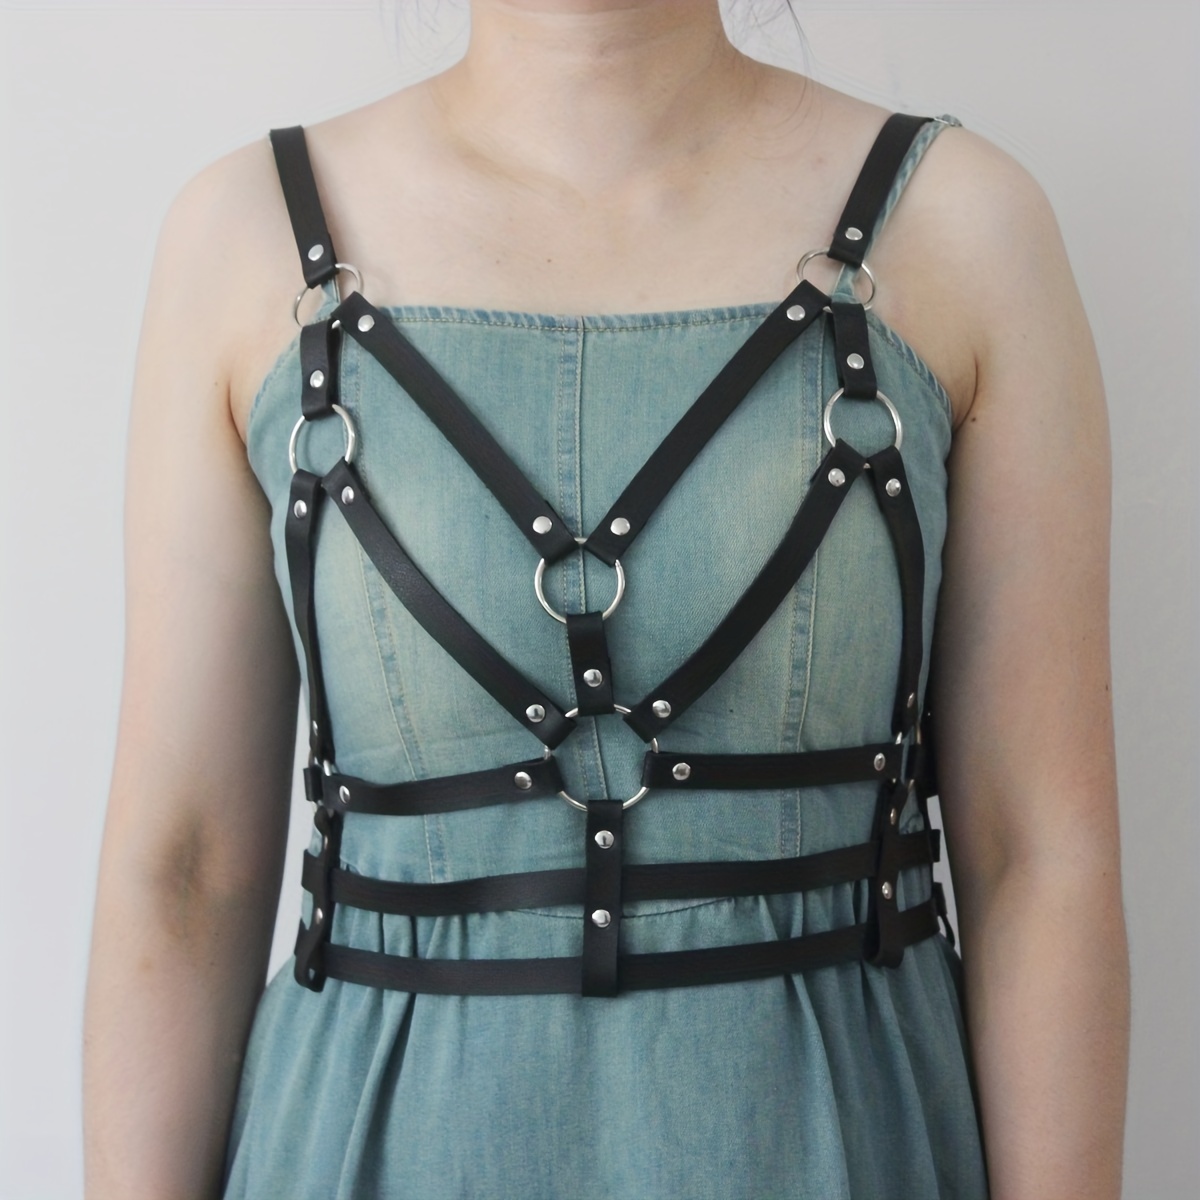 Women's PU Leather Body Chain Tassel Harness Chest Bra Belt Strap